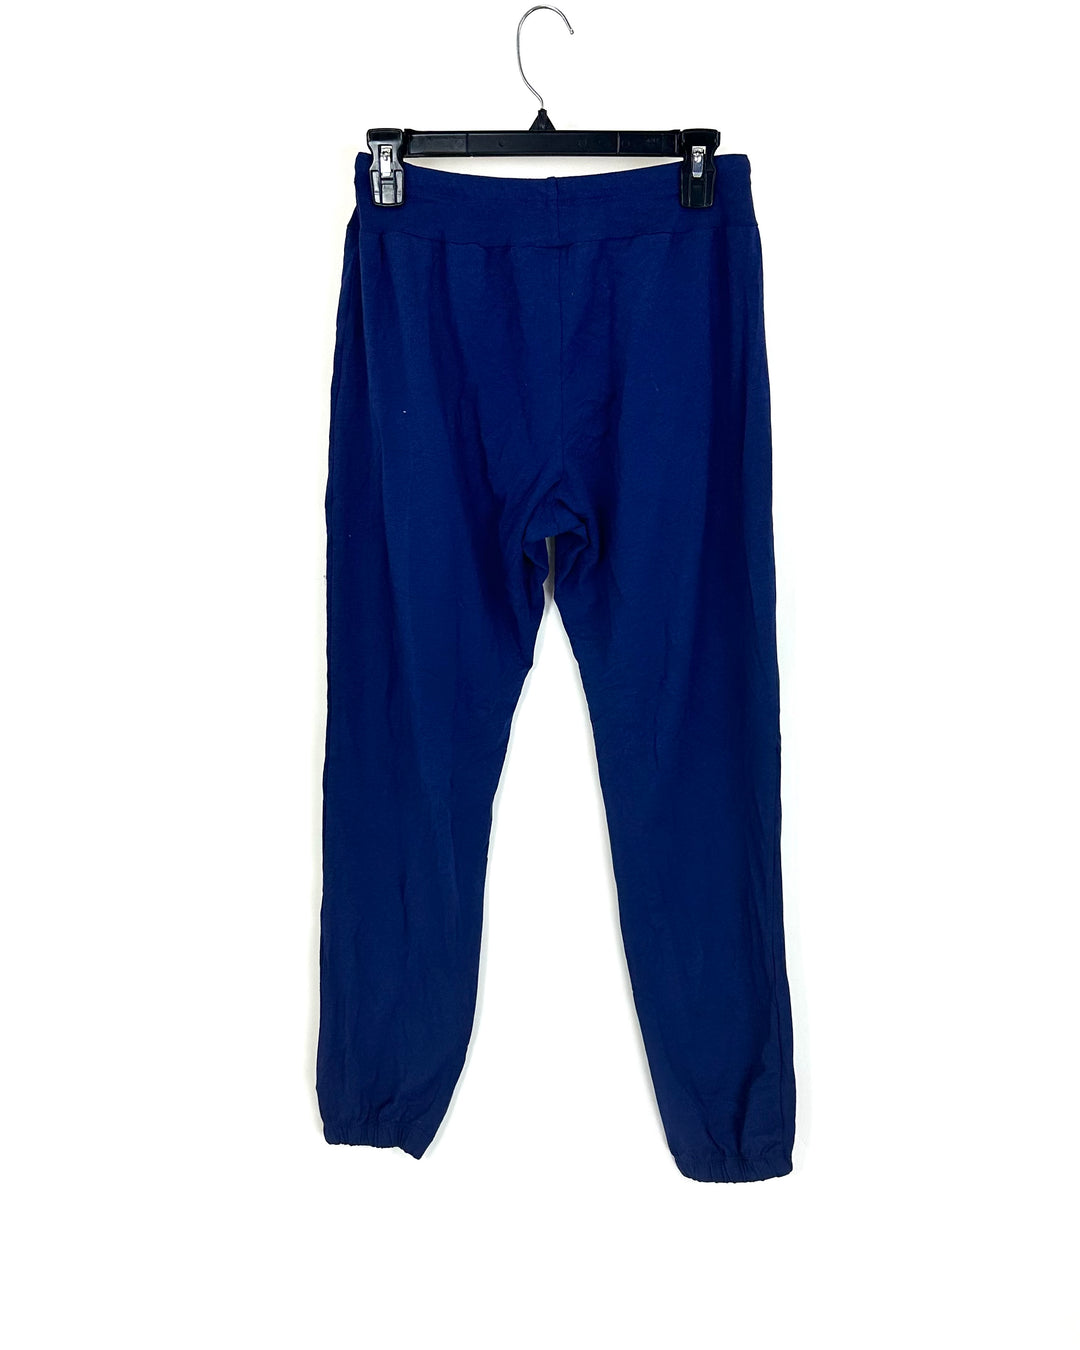 Navy Blue Sleepwear Pants - Small